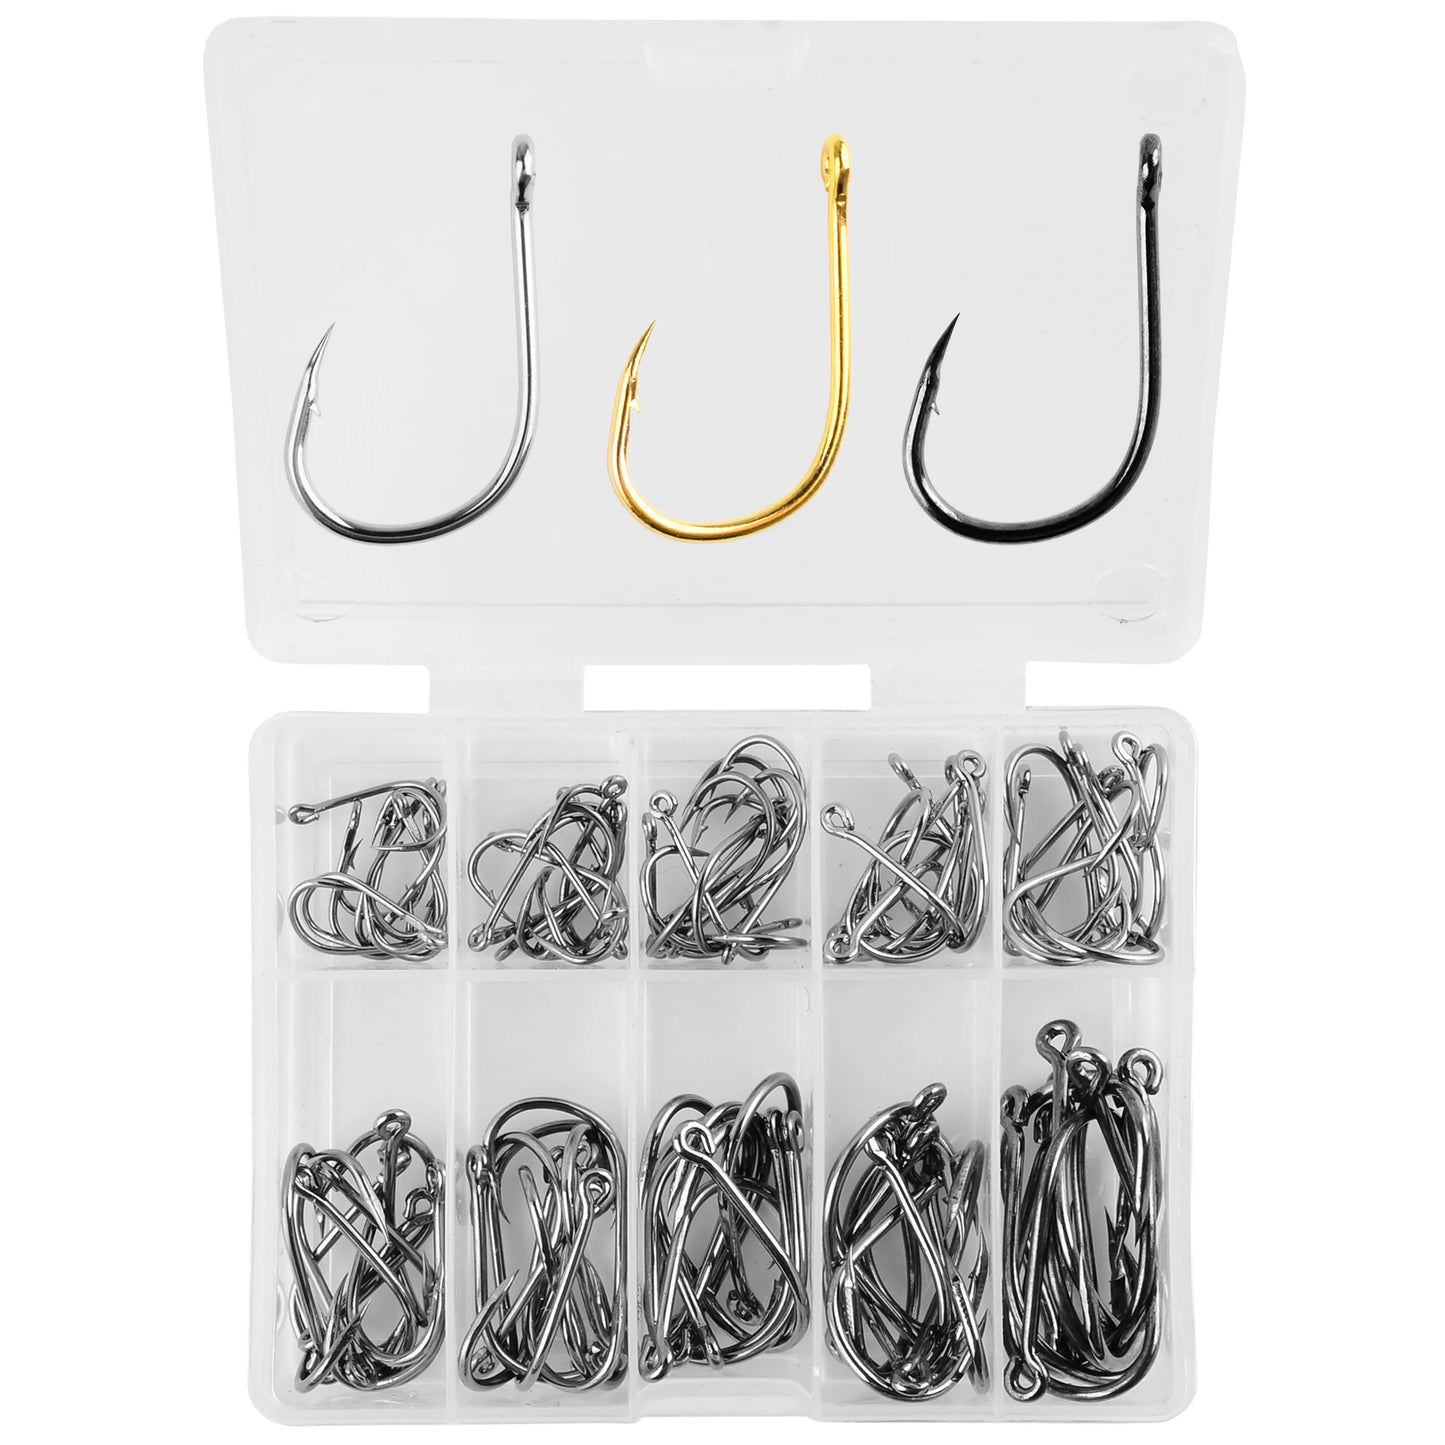 9-camp ® Aorace 100Pcs Fishing Hooks Set